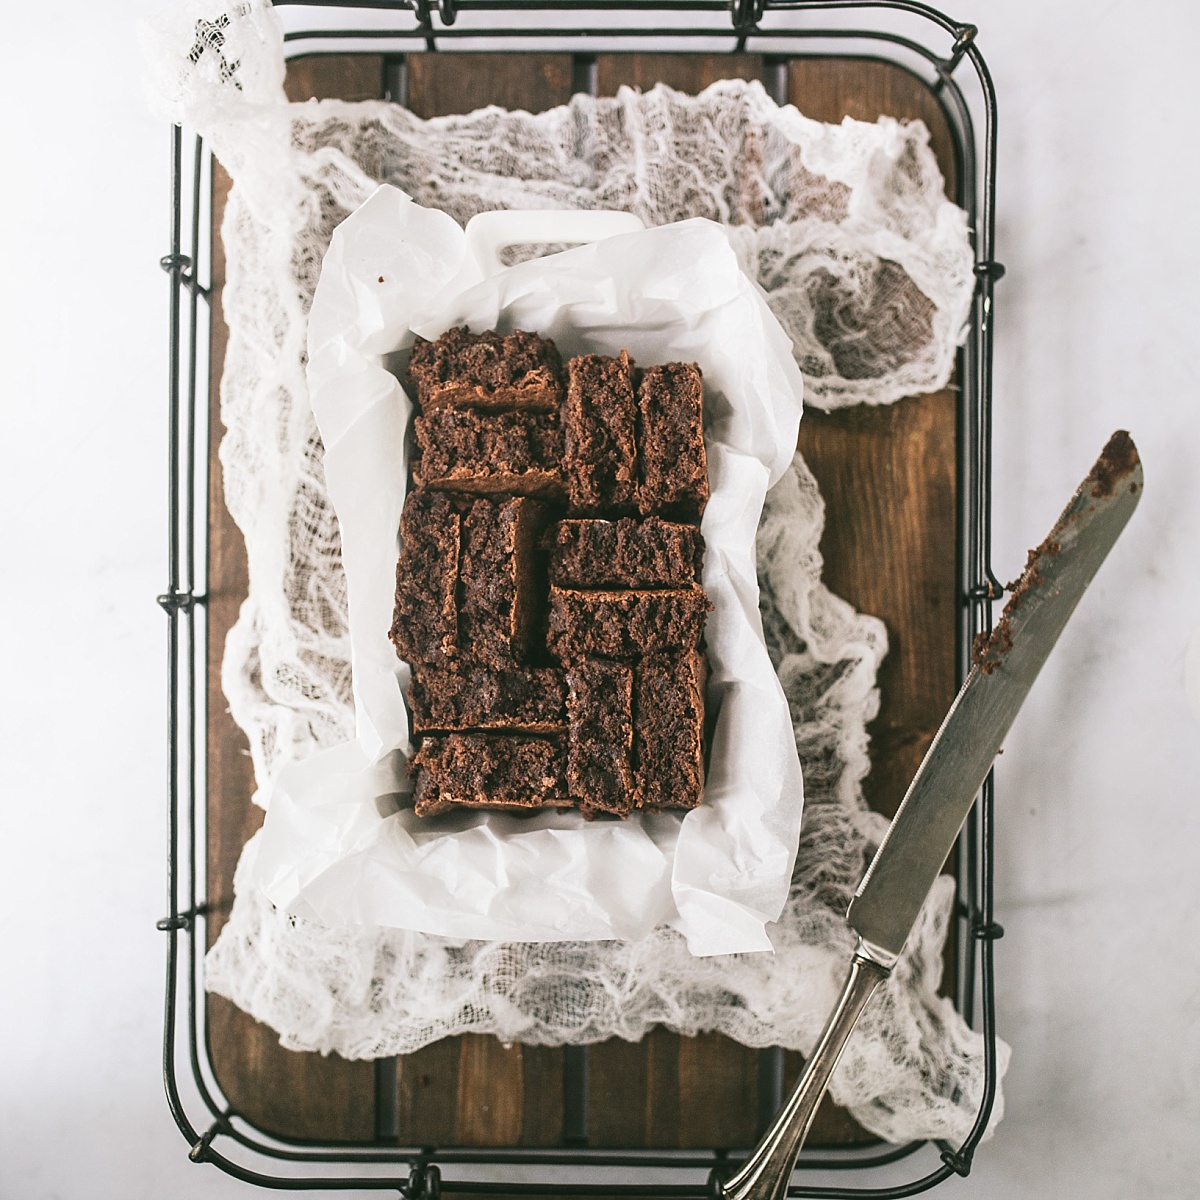 The ORIGINAL Baker's Chocolate Brownie Recipe